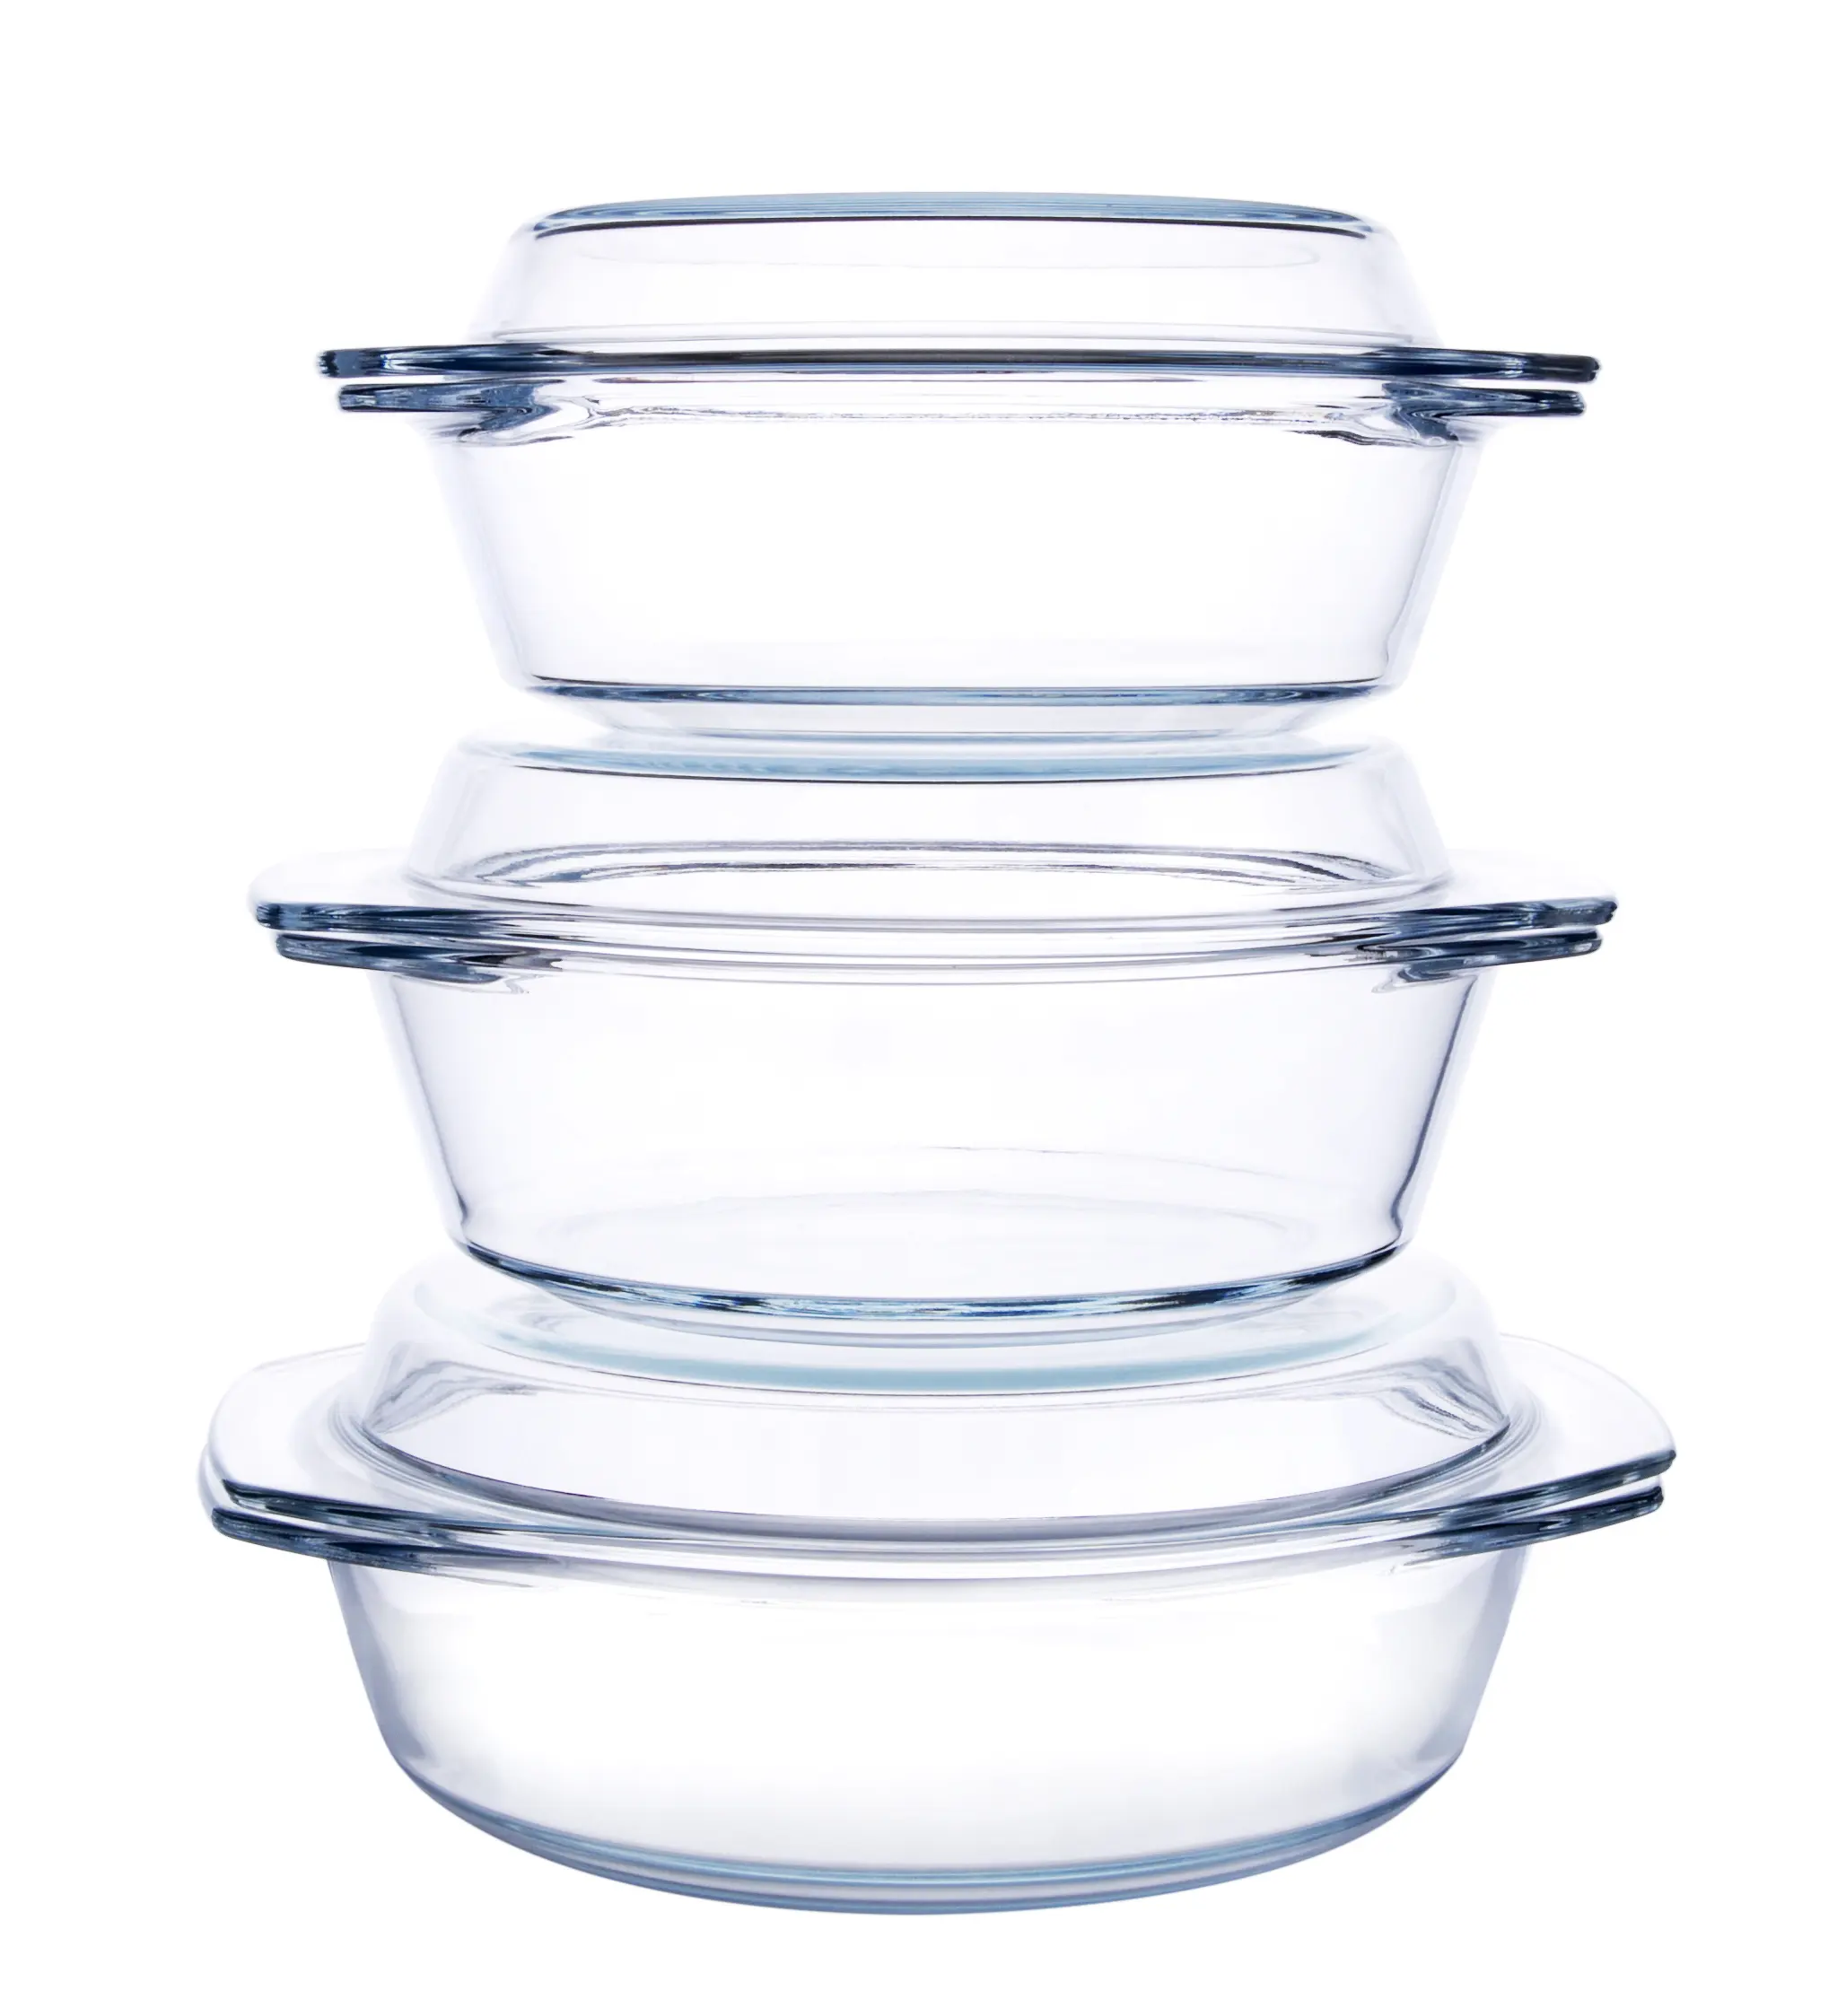 Cazuela de vidrio templado de borosilicato, transparente, resistente al calor, platos para hornear, sartenes con tapa de vidrio